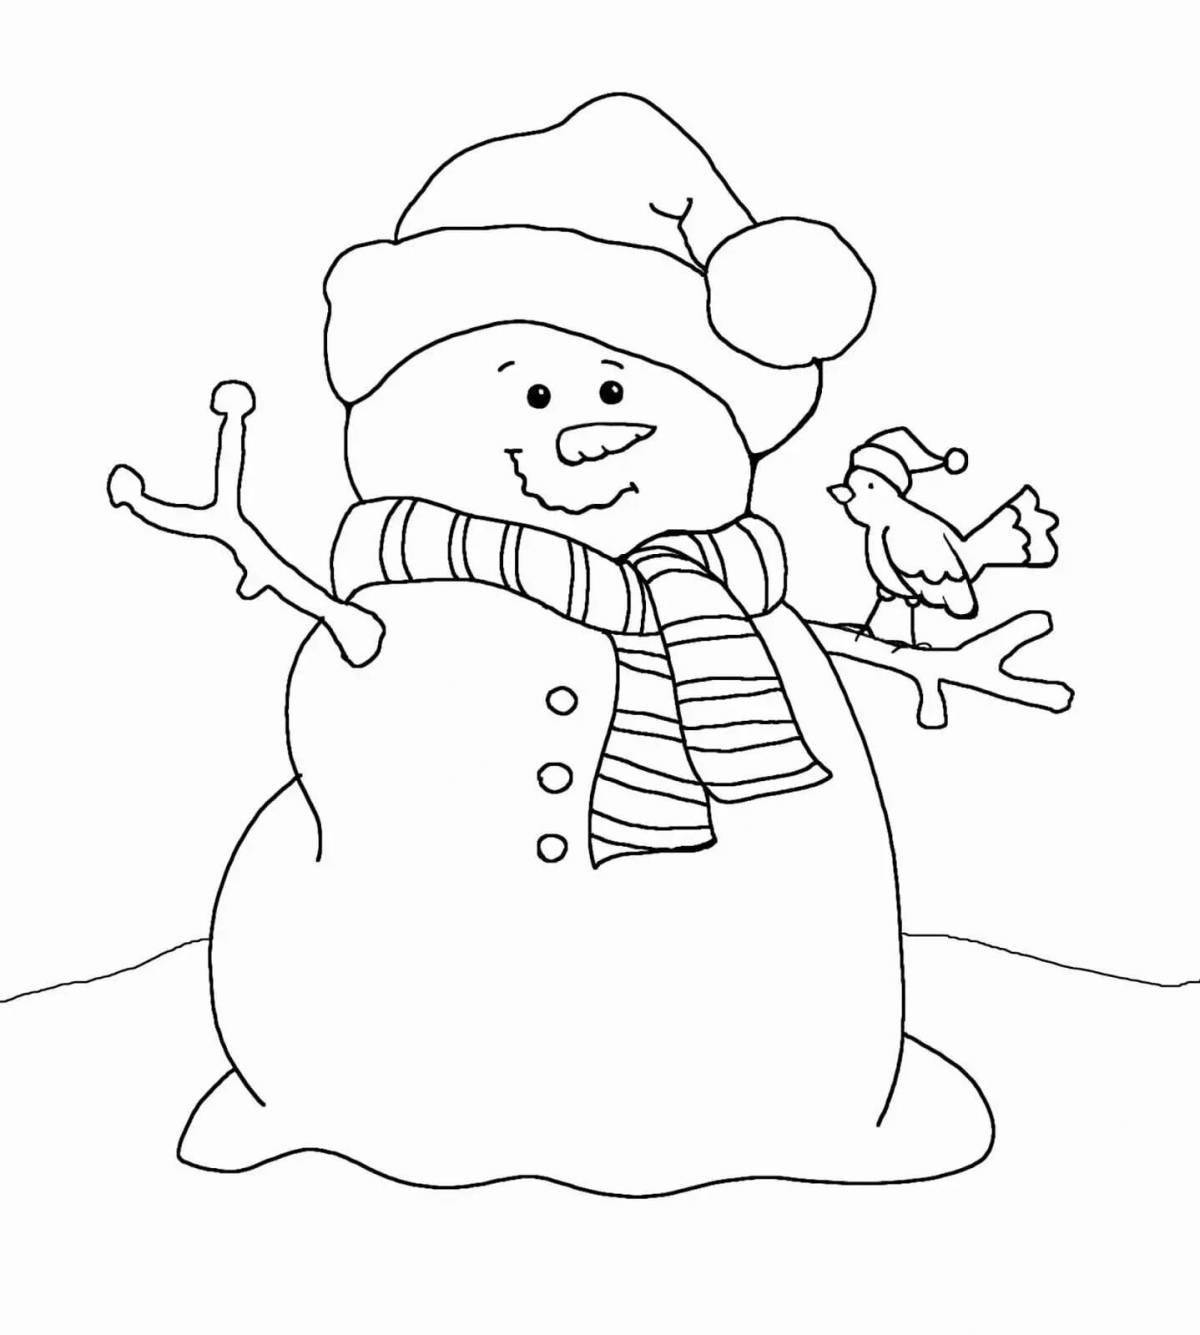 Sparkling cute snowman coloring book